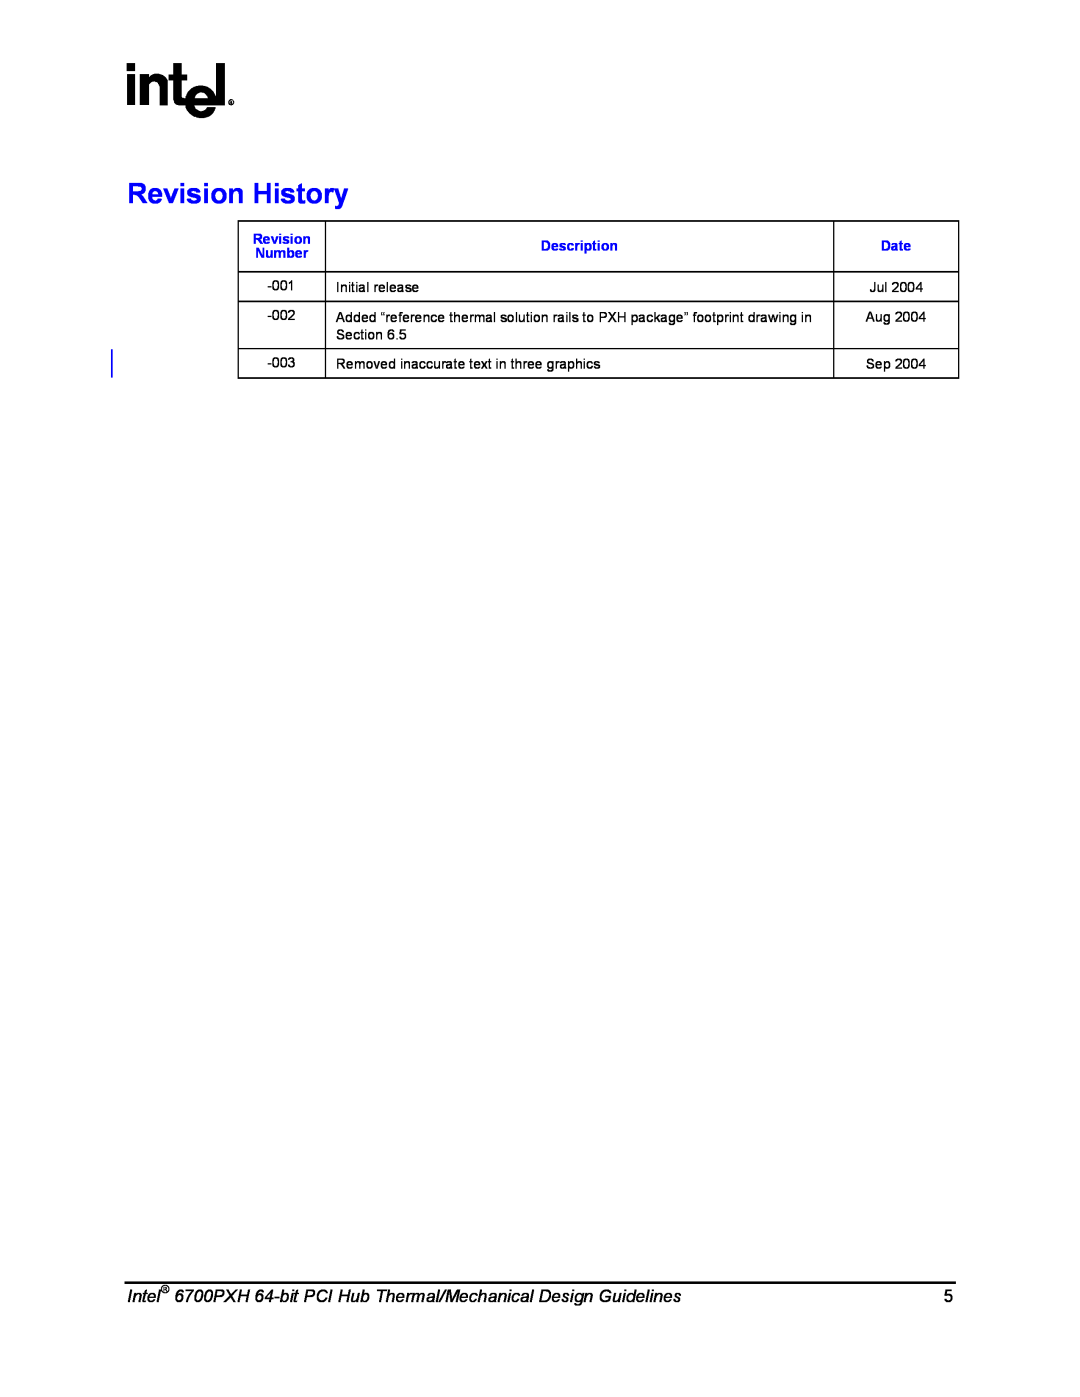 Intel Revision History, Intel 6700PXH 64-bit PCI Hub Thermal/Mechanical Design Guidelines, Description, Date, Section 